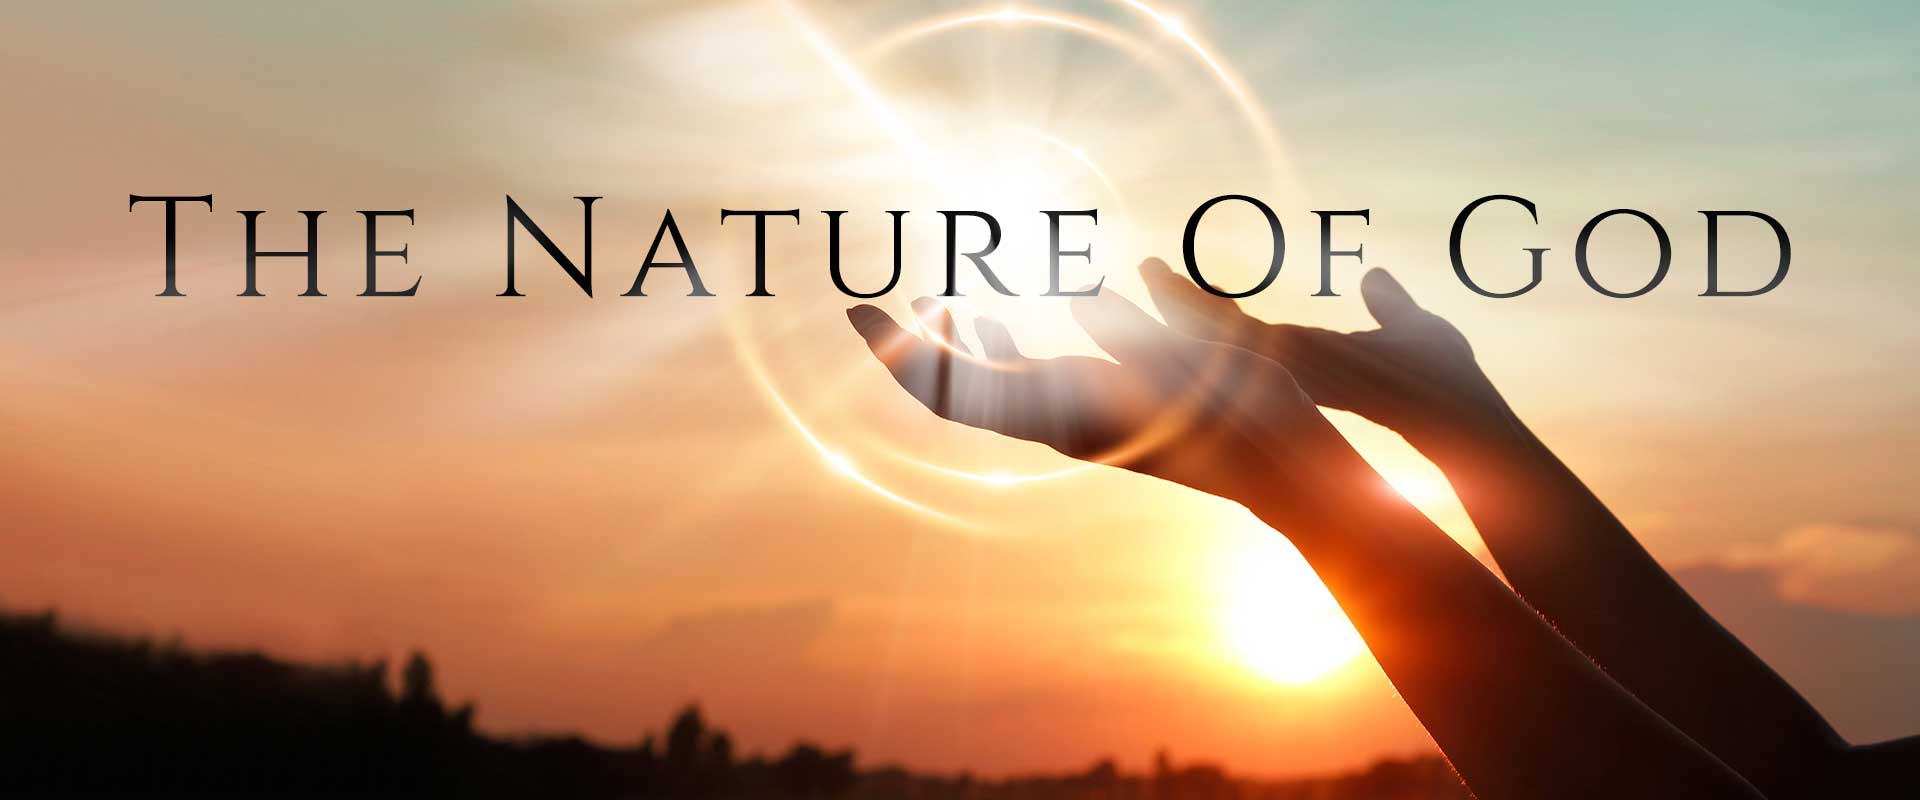 Volume I: The Nature of God